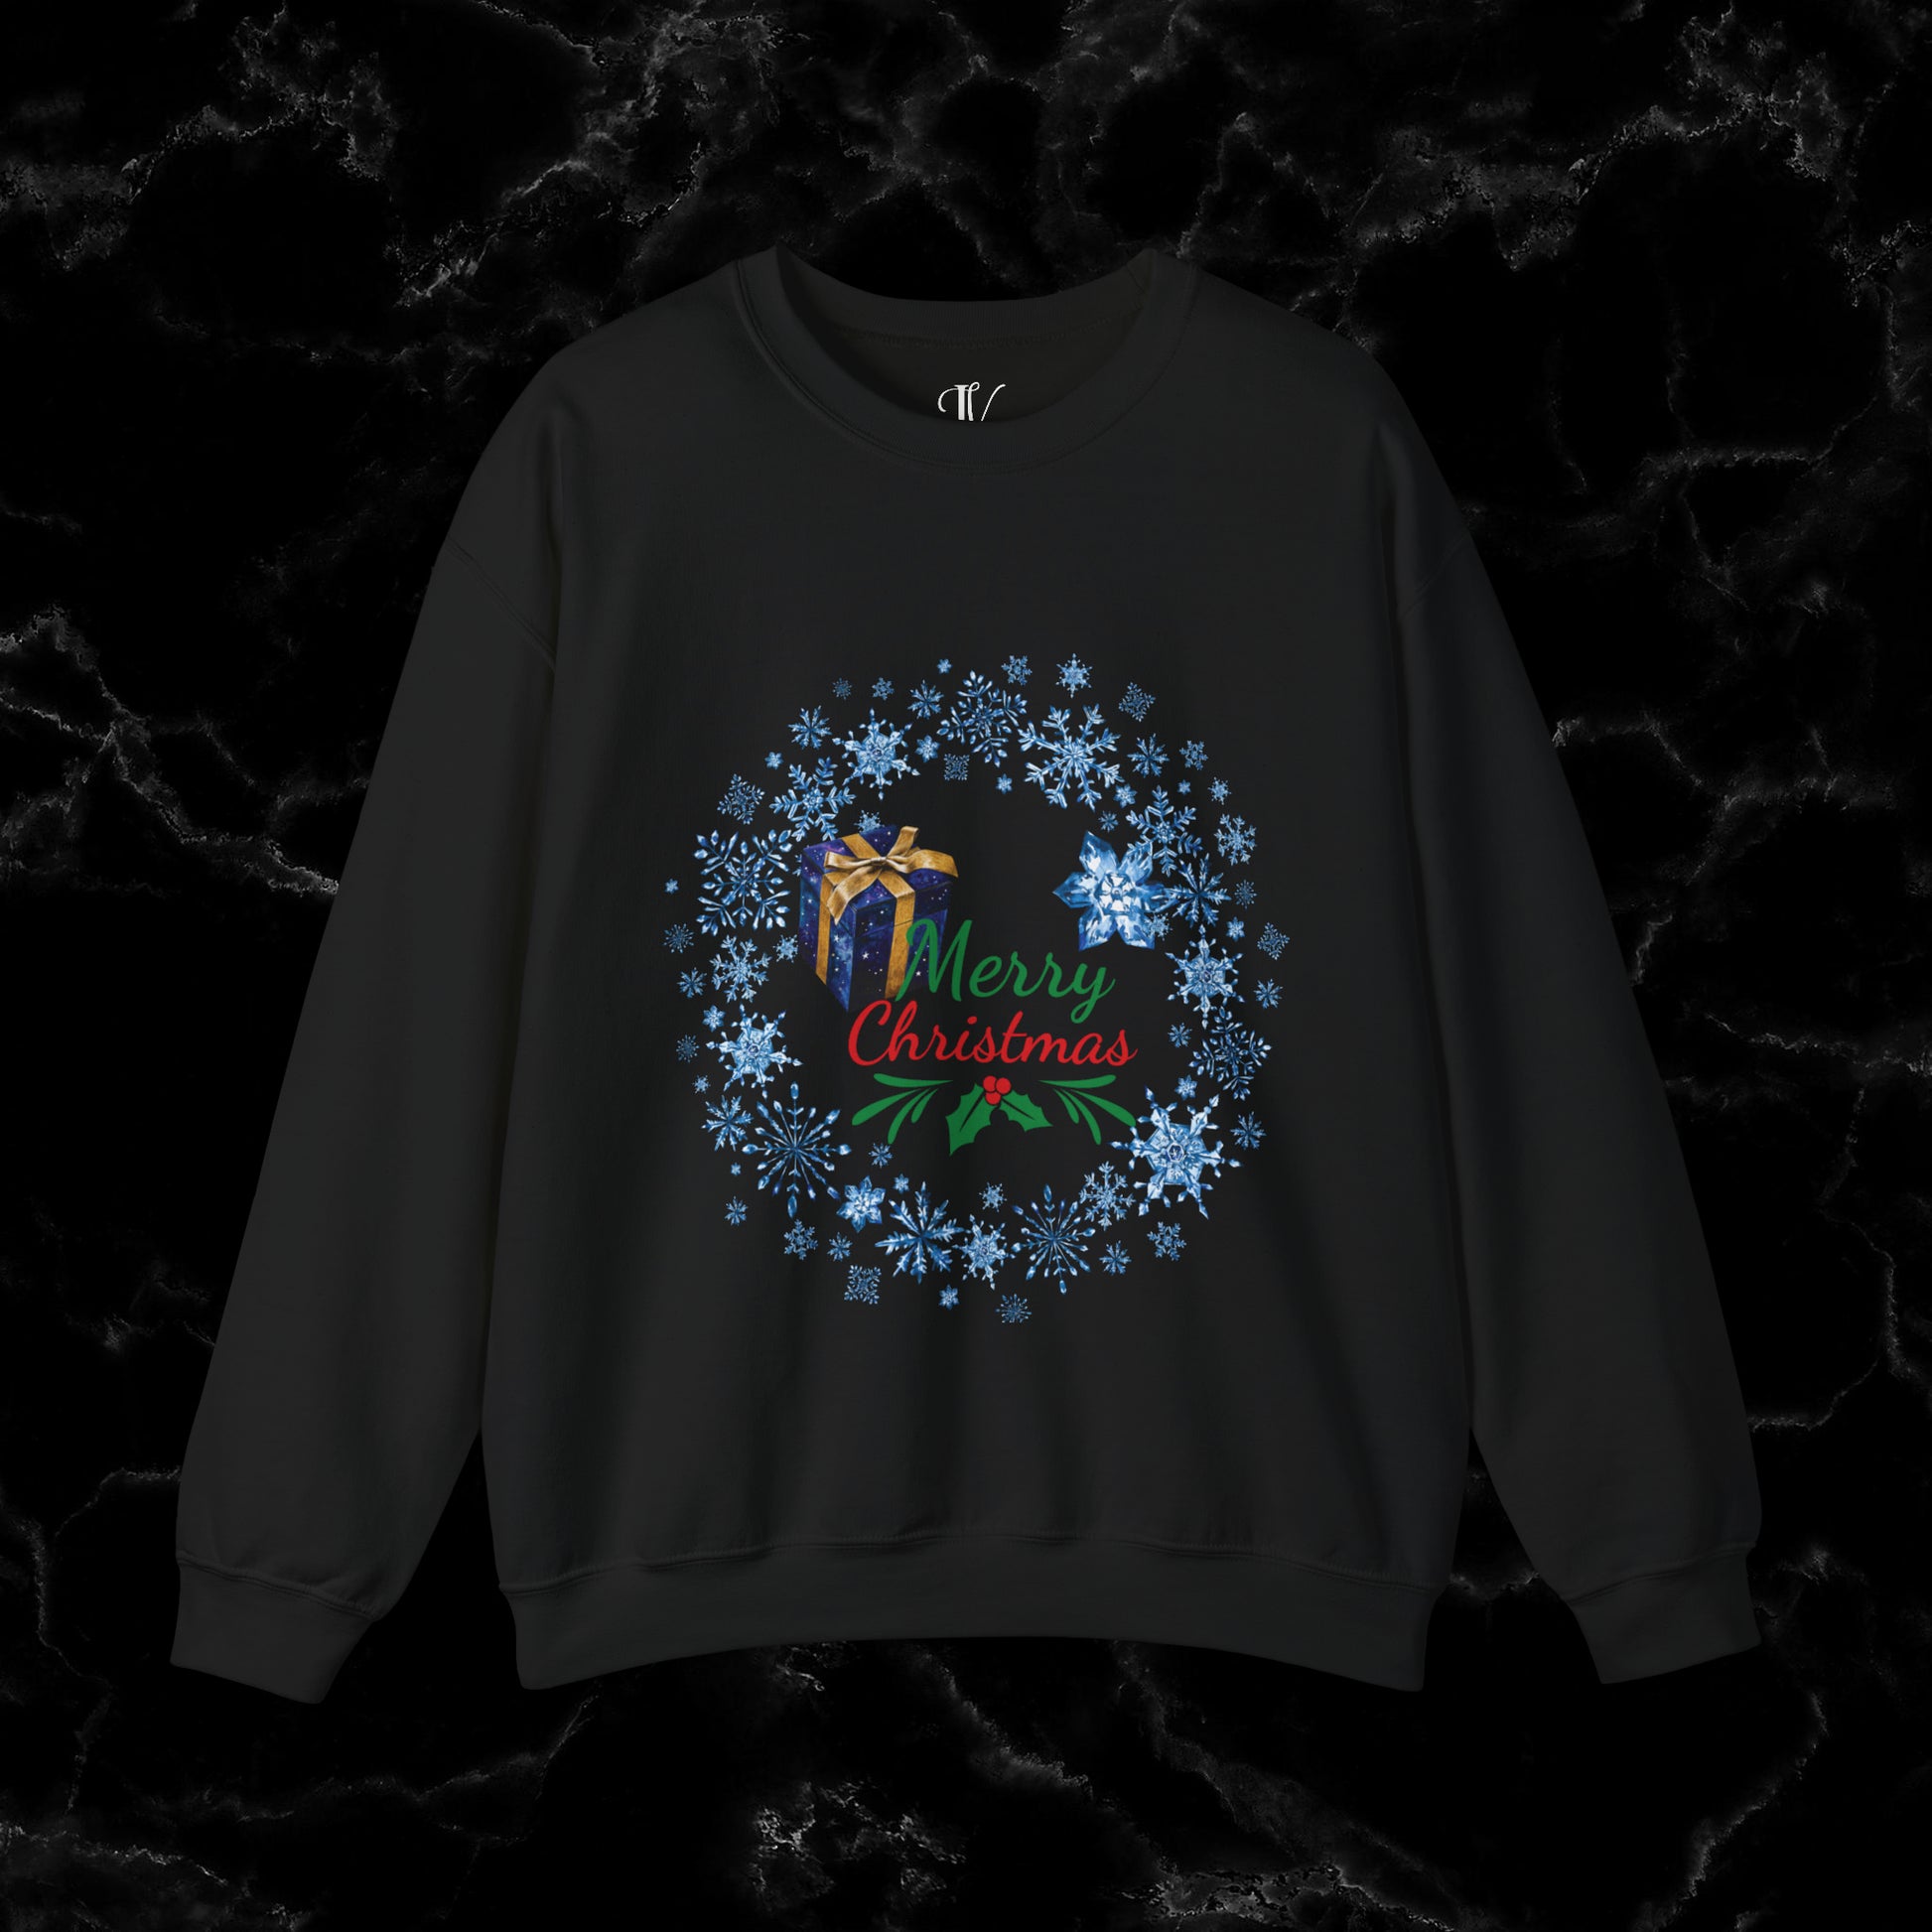 Merry Christmas Sweatshirt - Matching Christmas Shirt, Wreath Design, Holiday Gift Sweatshirt S Black 